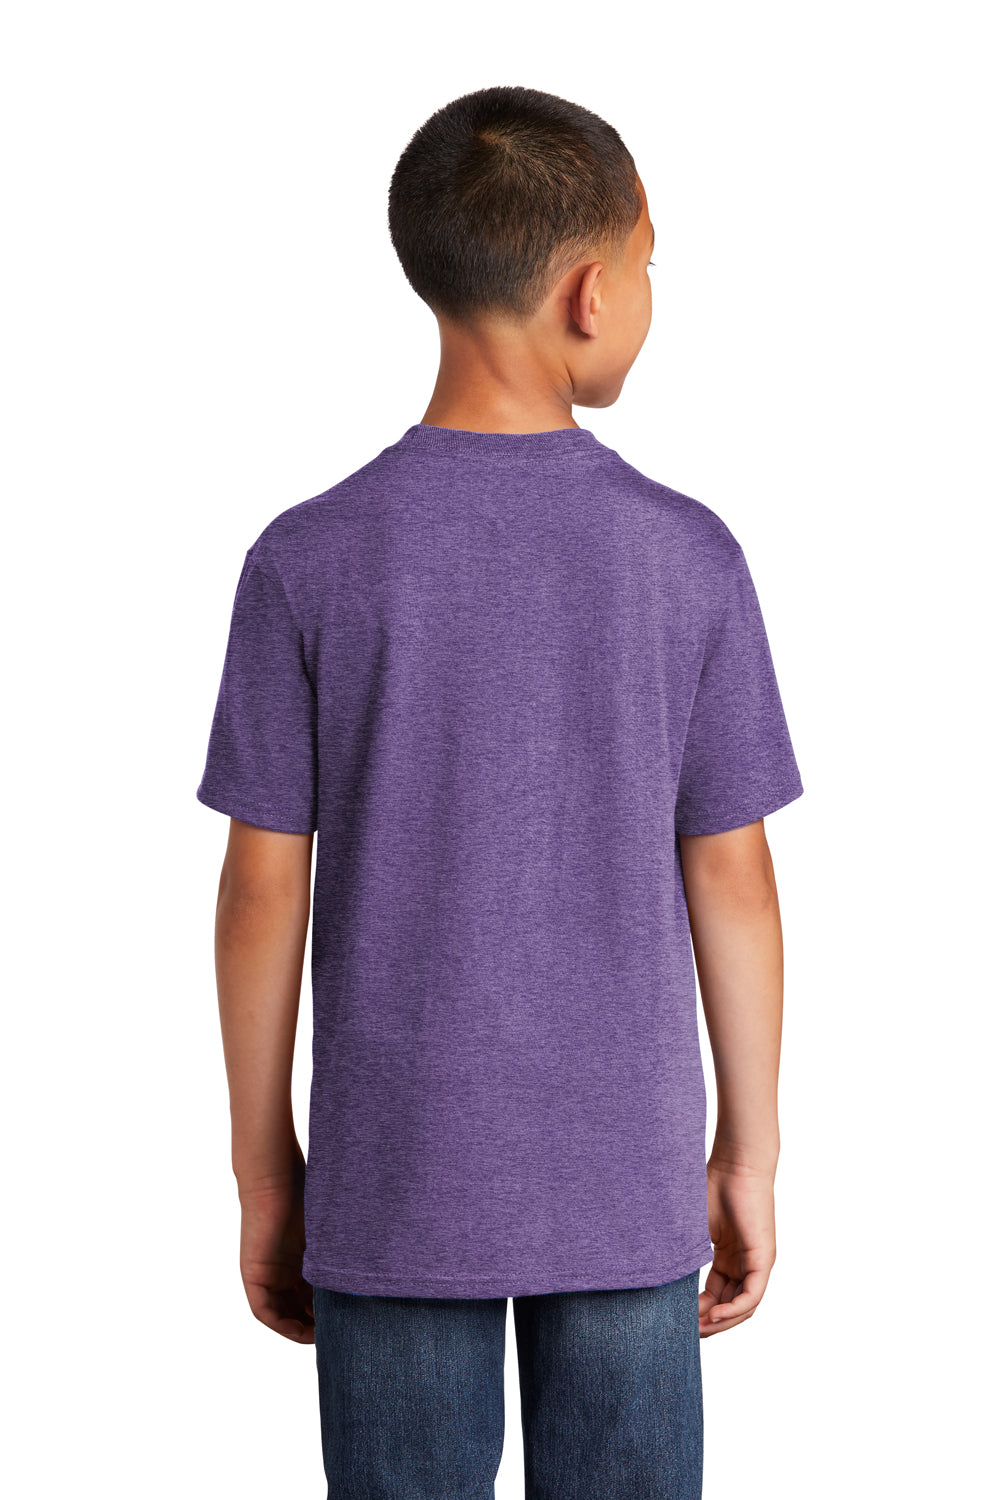 Port & Company PC54Y Youth Core Short Sleeve Crewneck T-Shirt Heather Purple Back